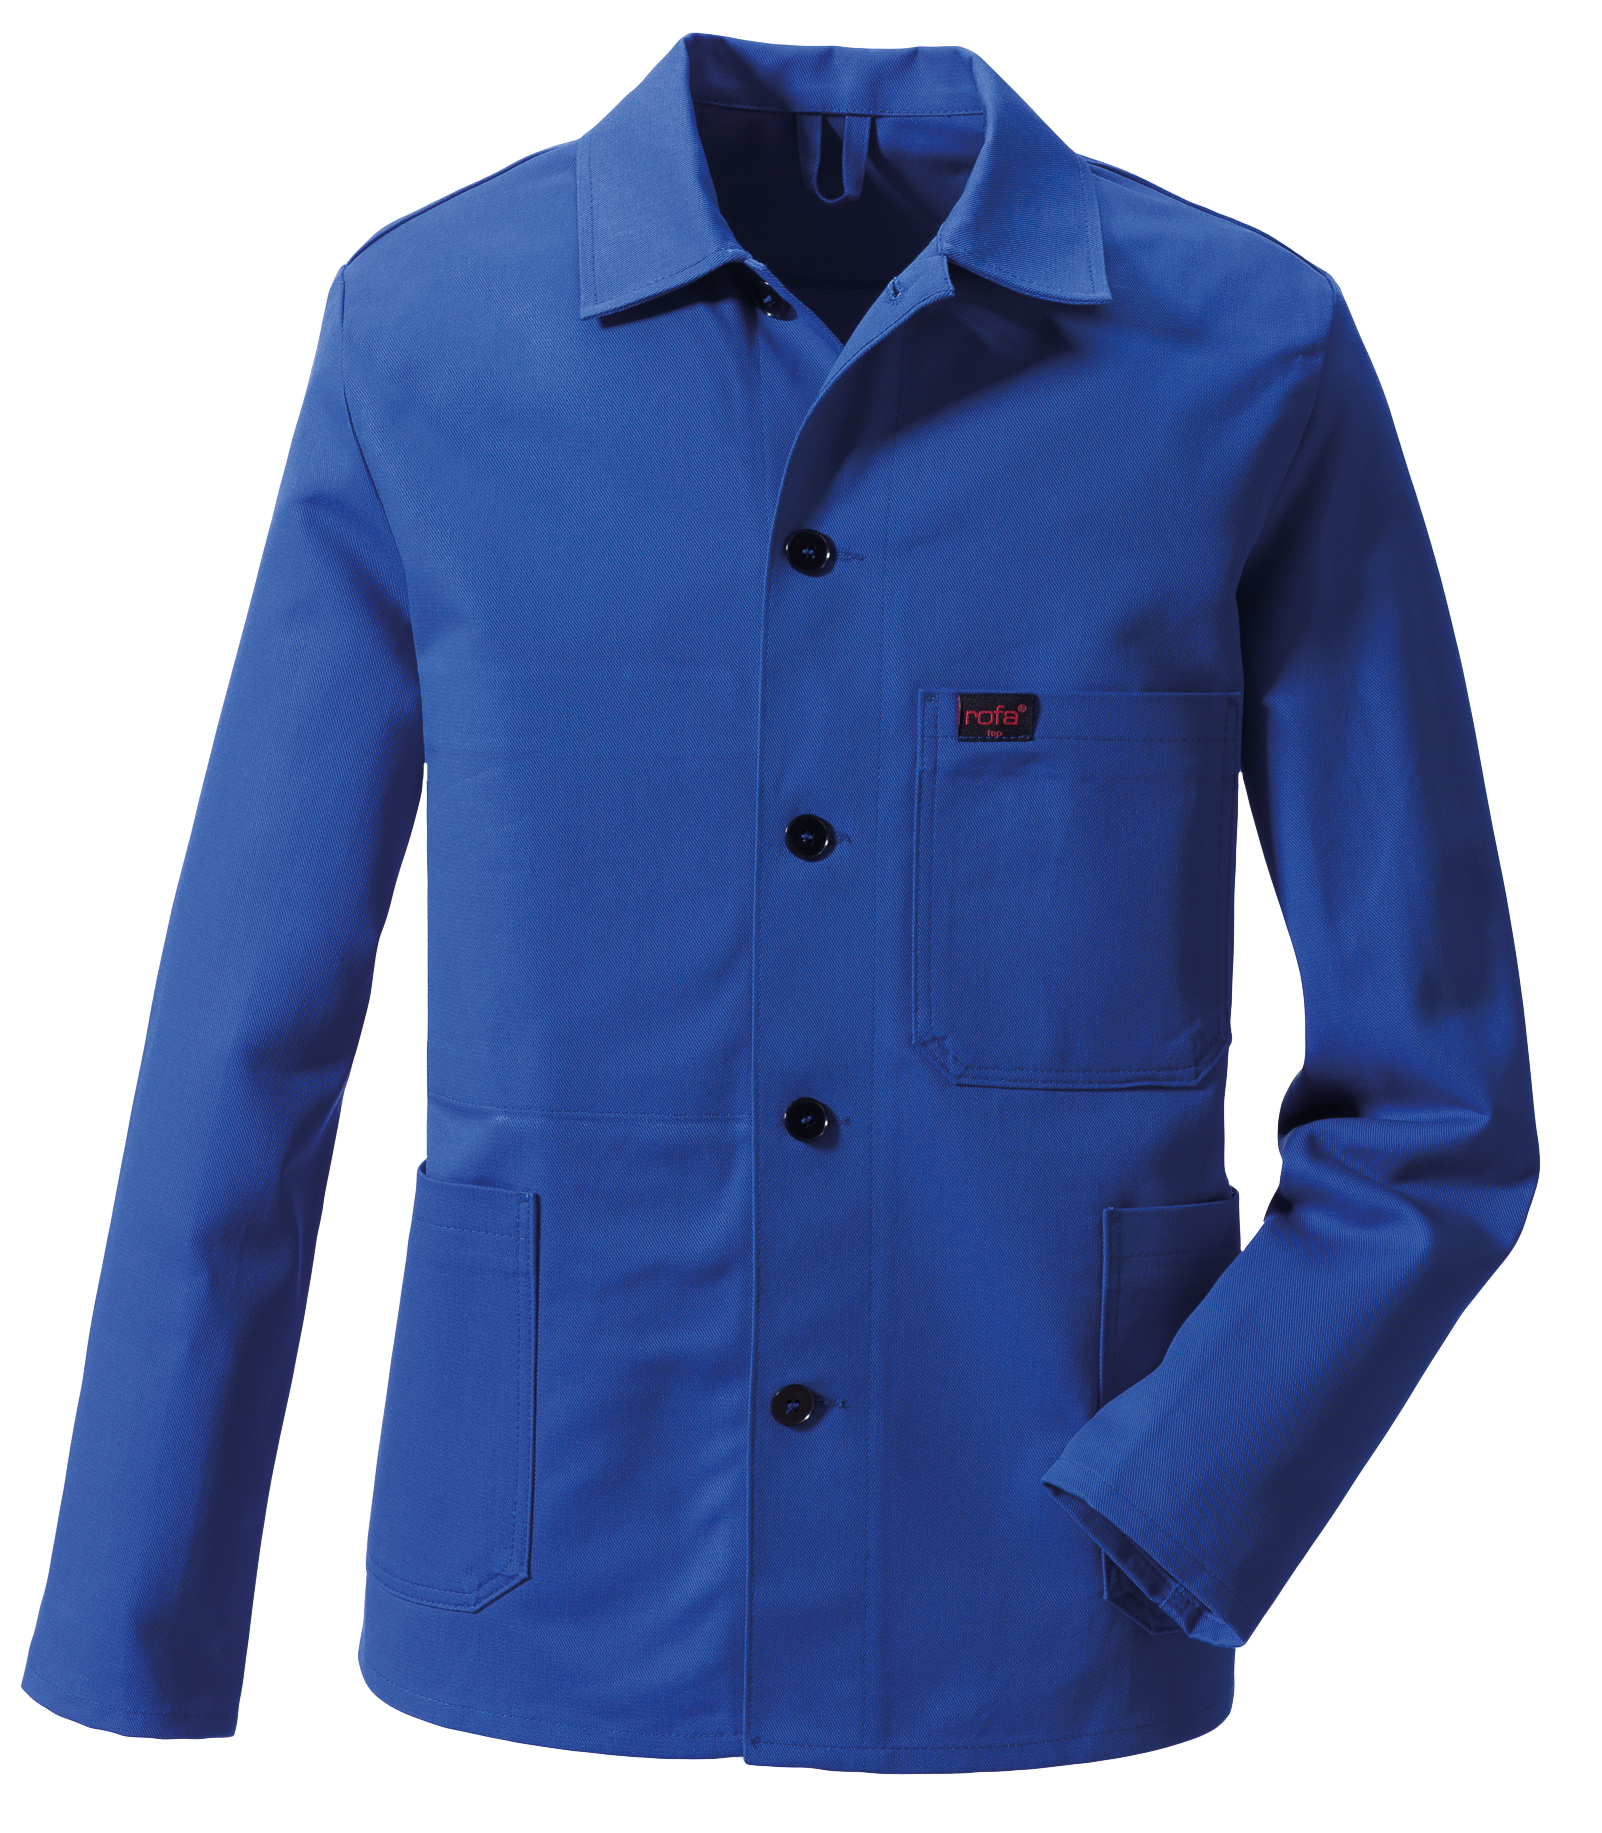 ROFA-Workwear, Arbeits-Berufs-Jacke, ca. 330 g/m², kornblau